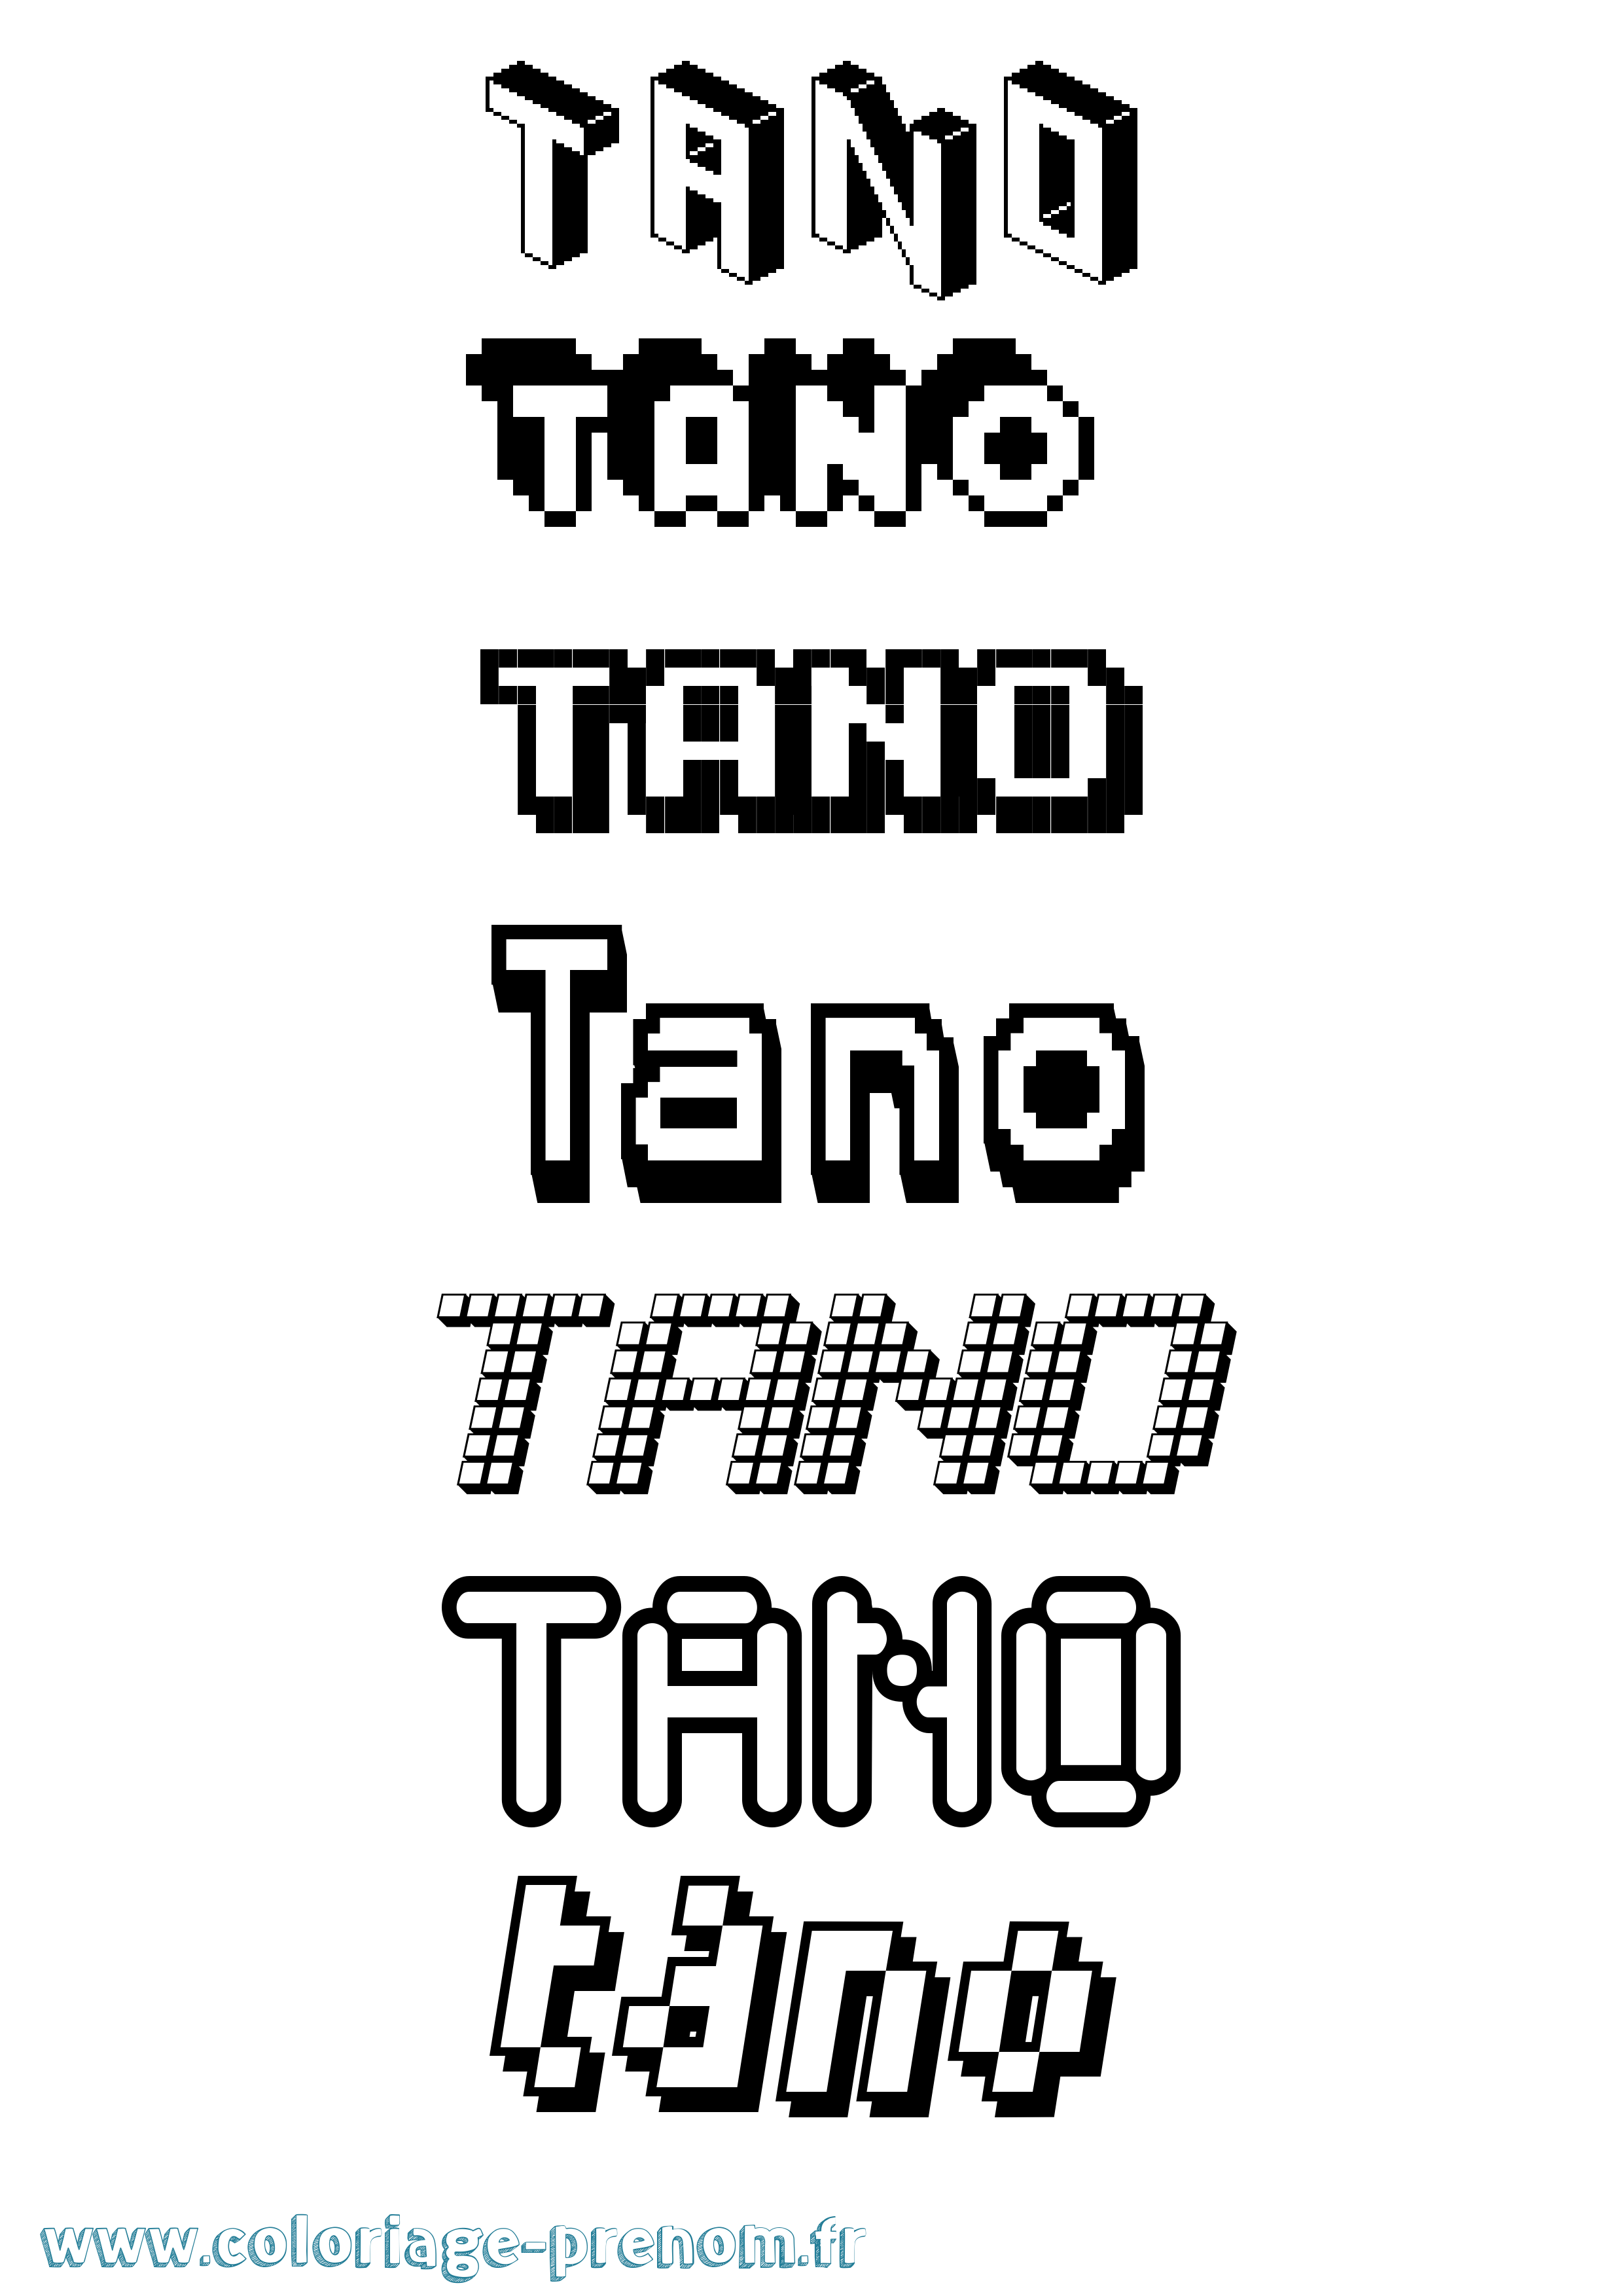 Coloriage prénom Tano Pixel